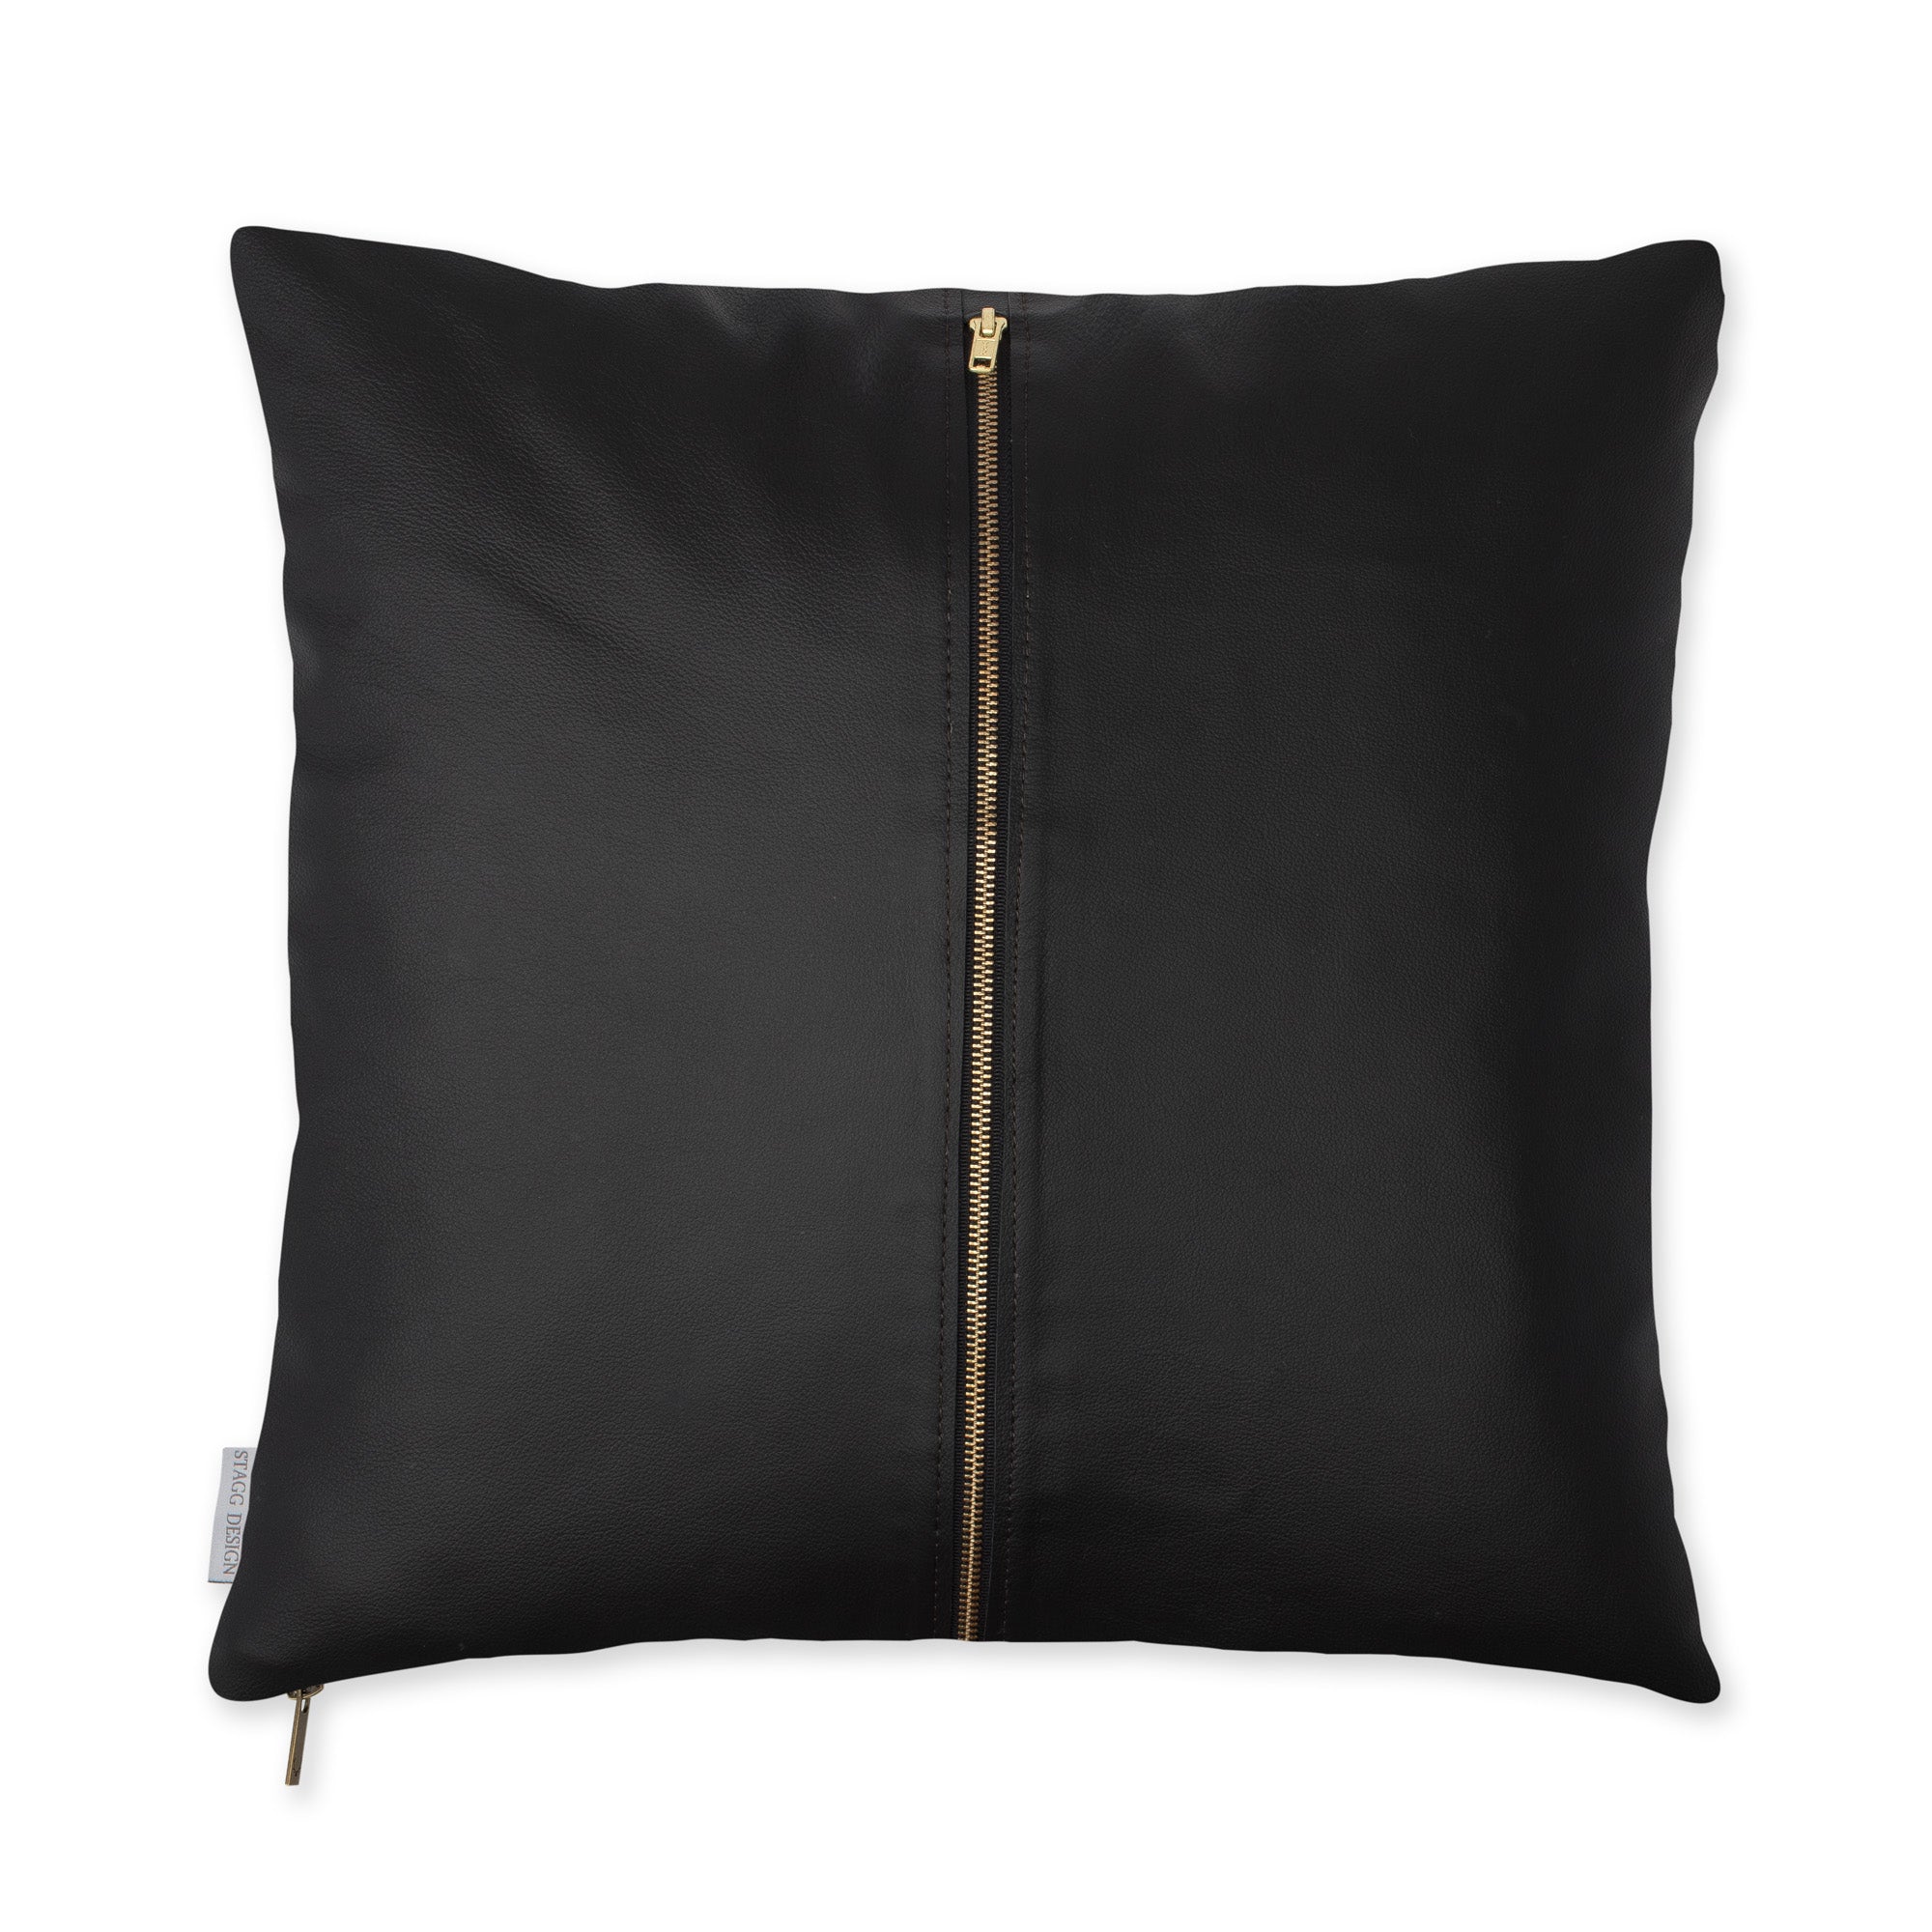 Signature Leather Pillow - Black